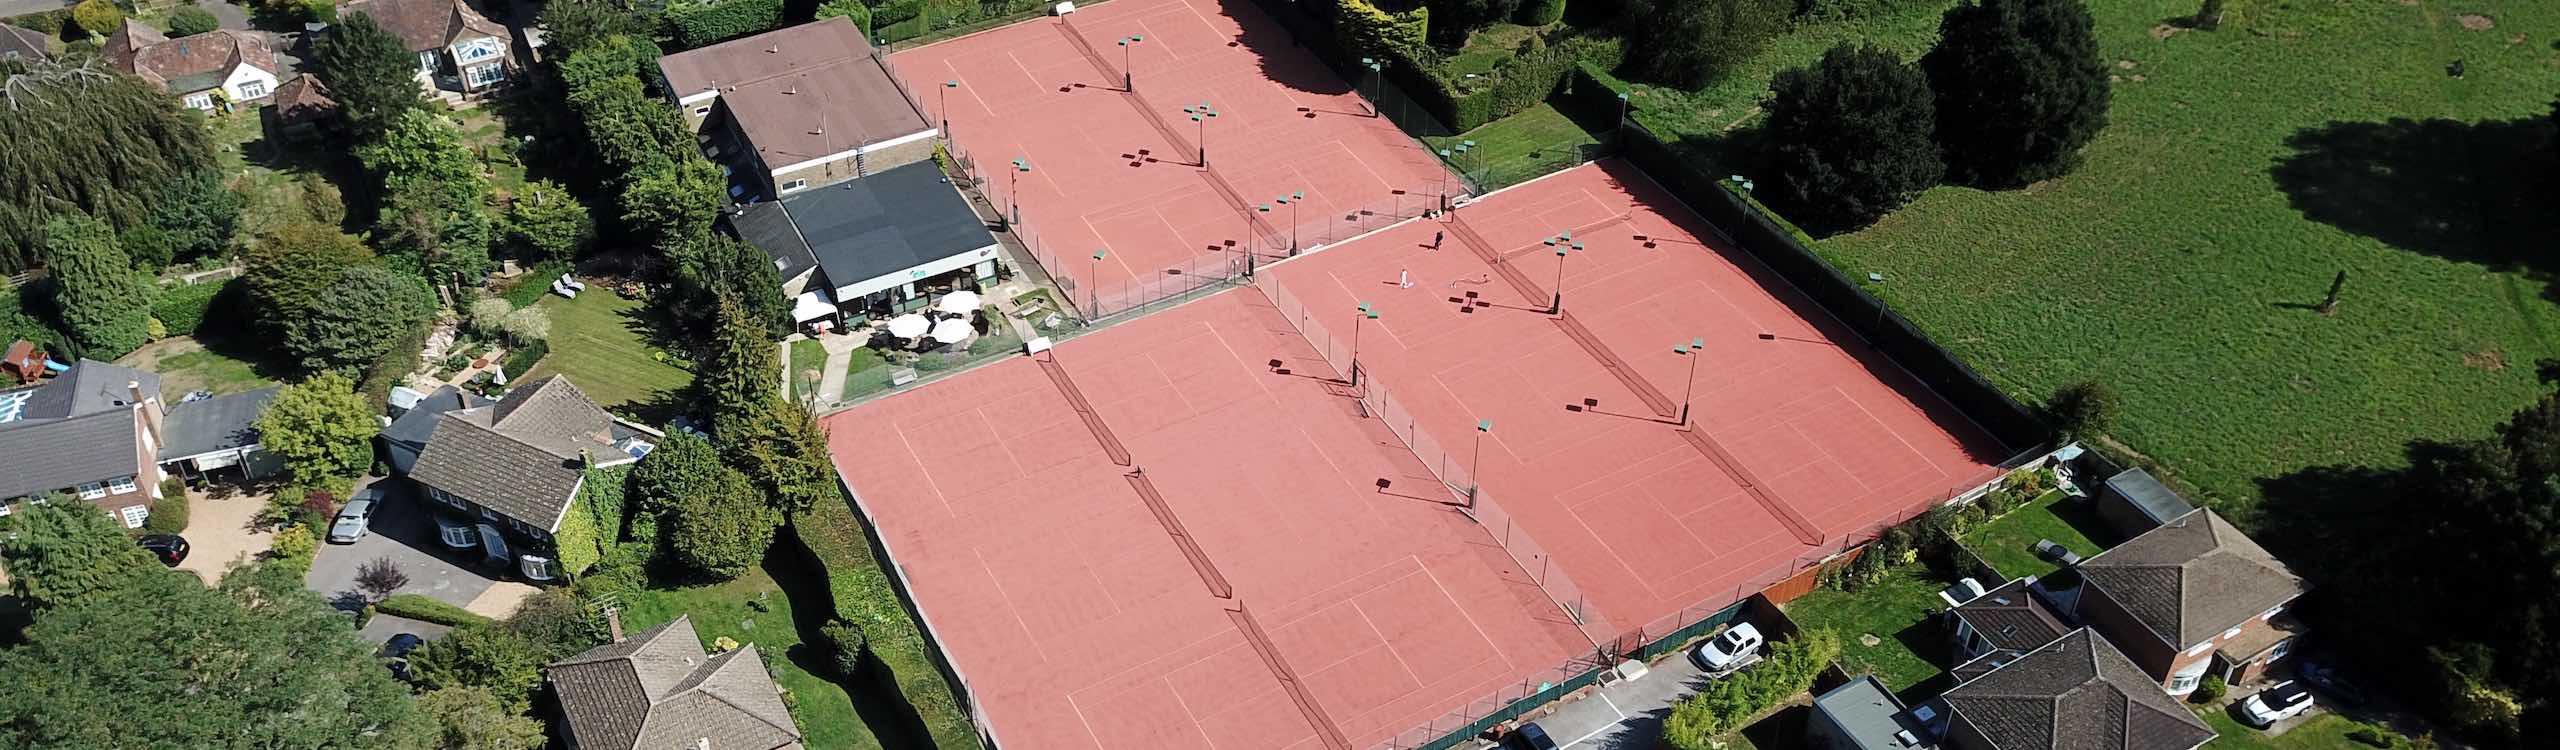 Dorking Lawn Tennis & Squash Club